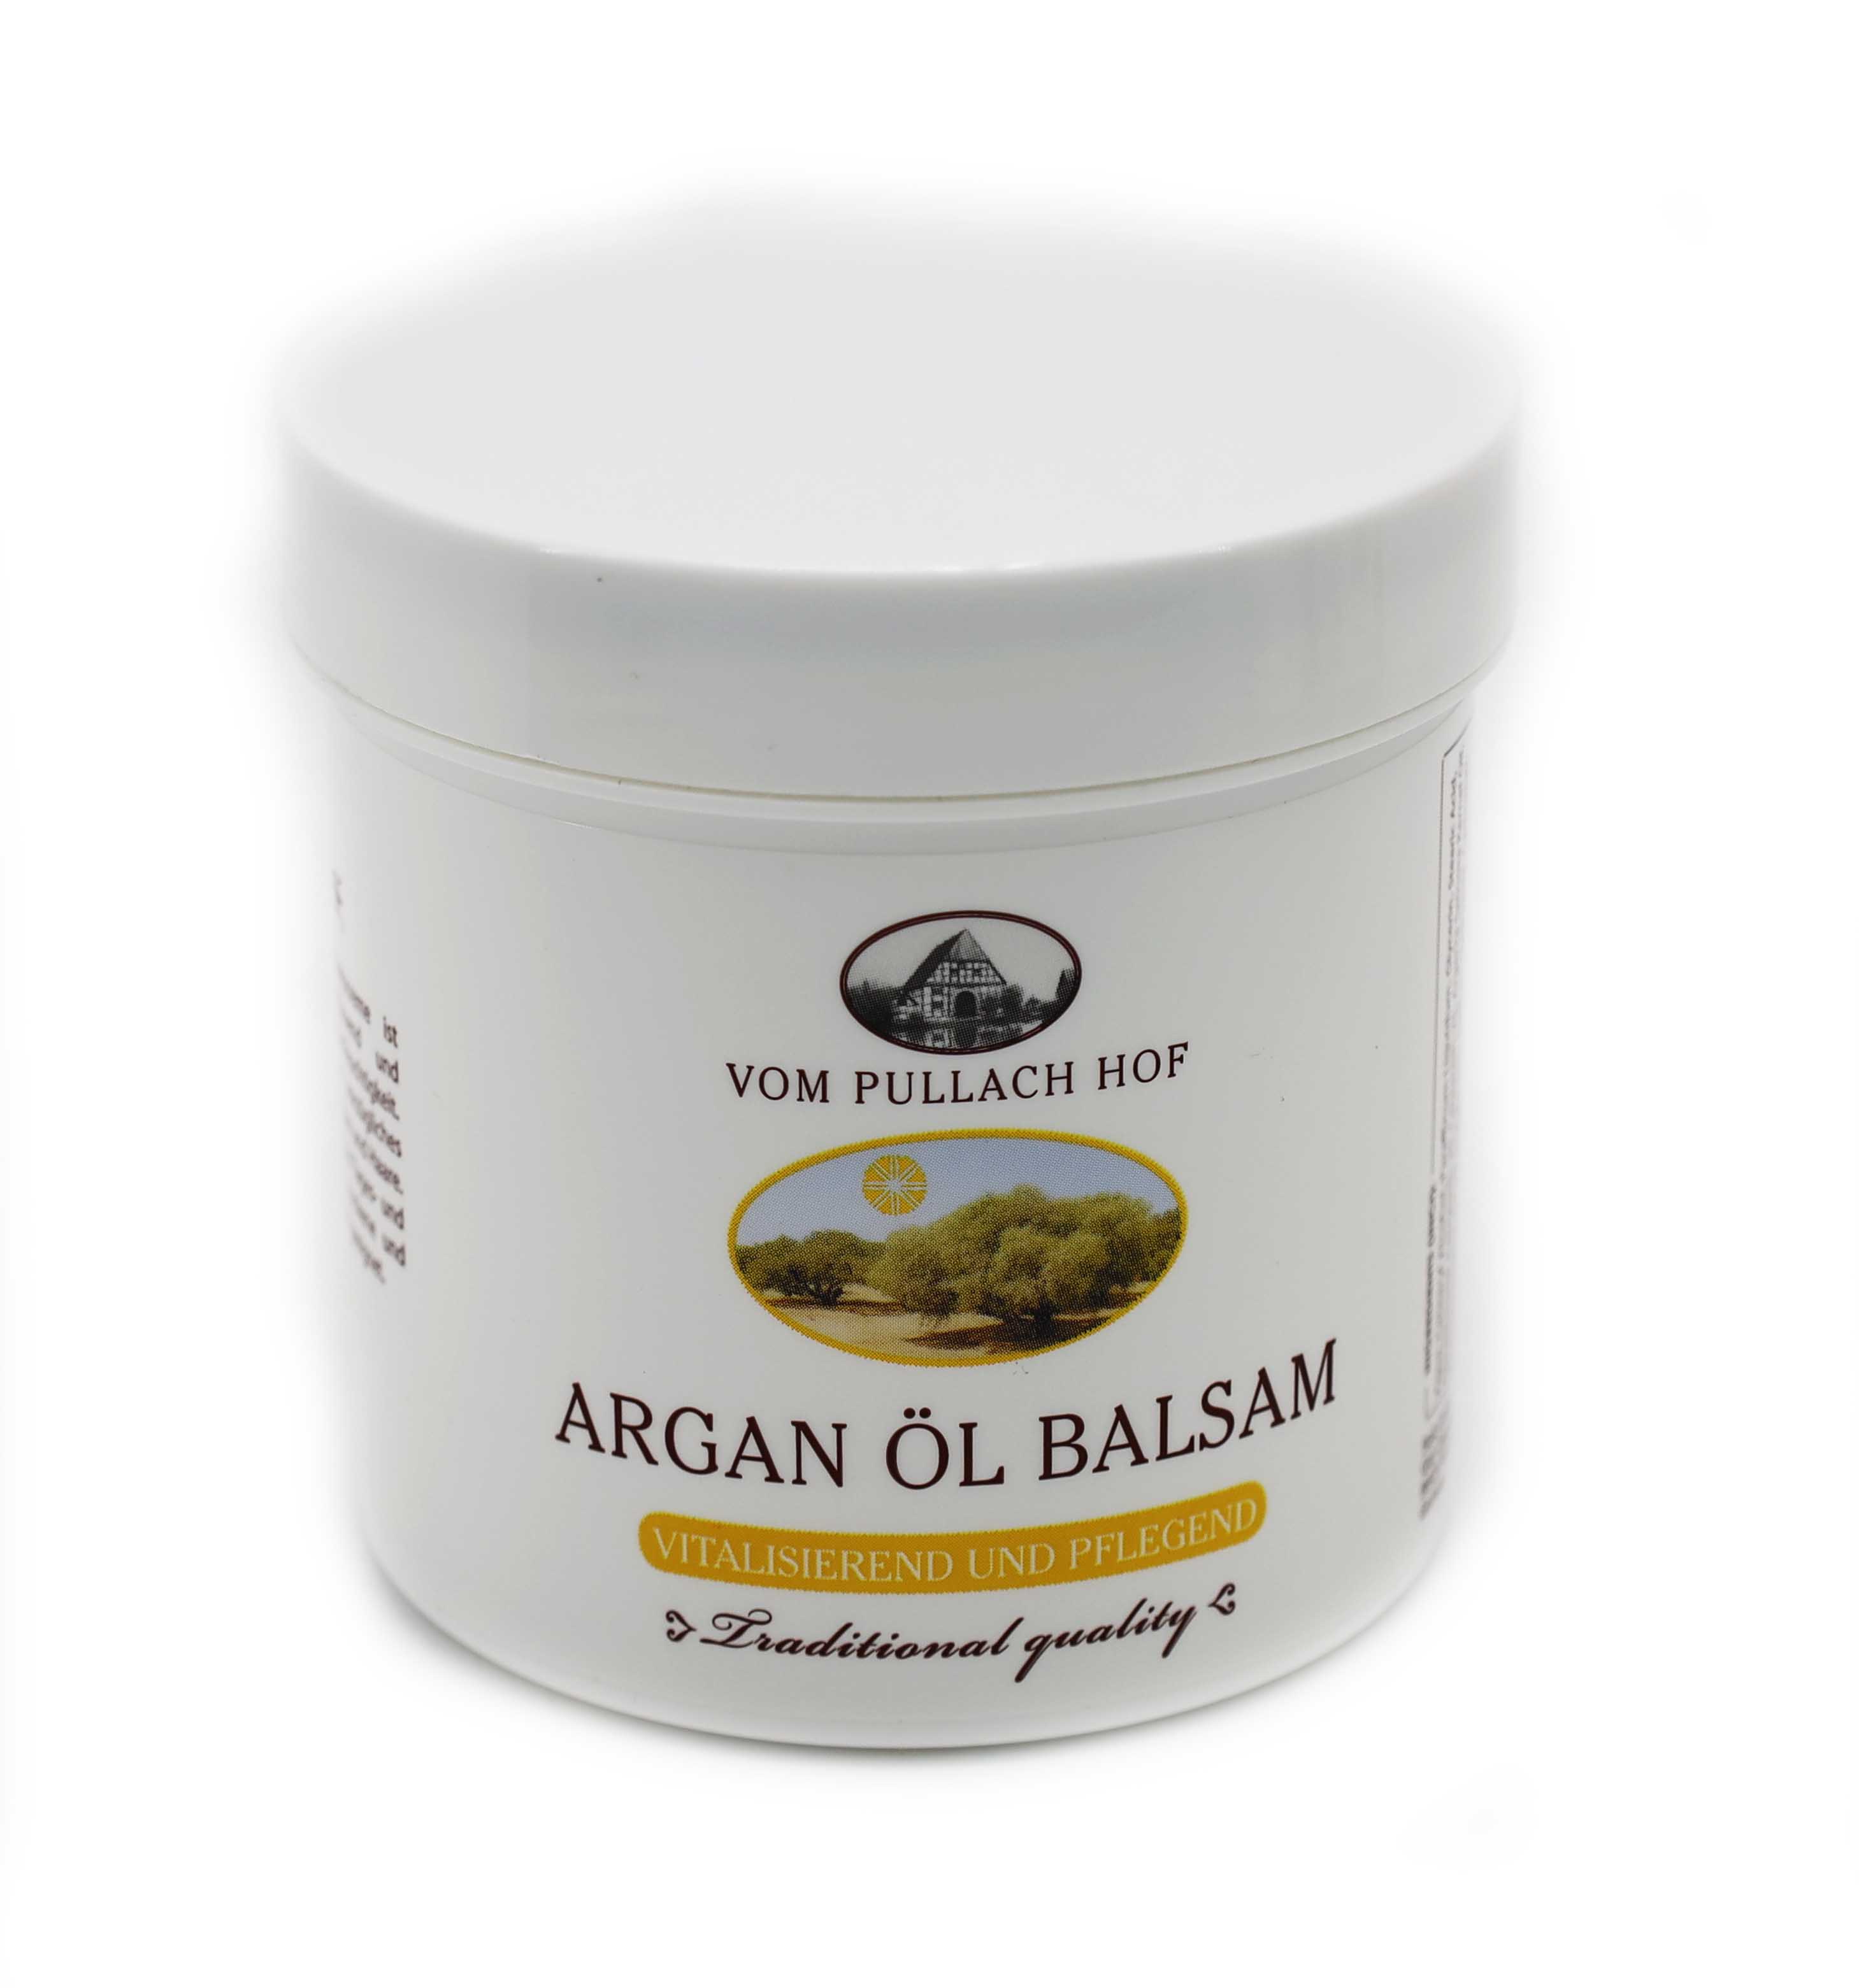 Argan Öl Balsam 250ml - PH - traditional